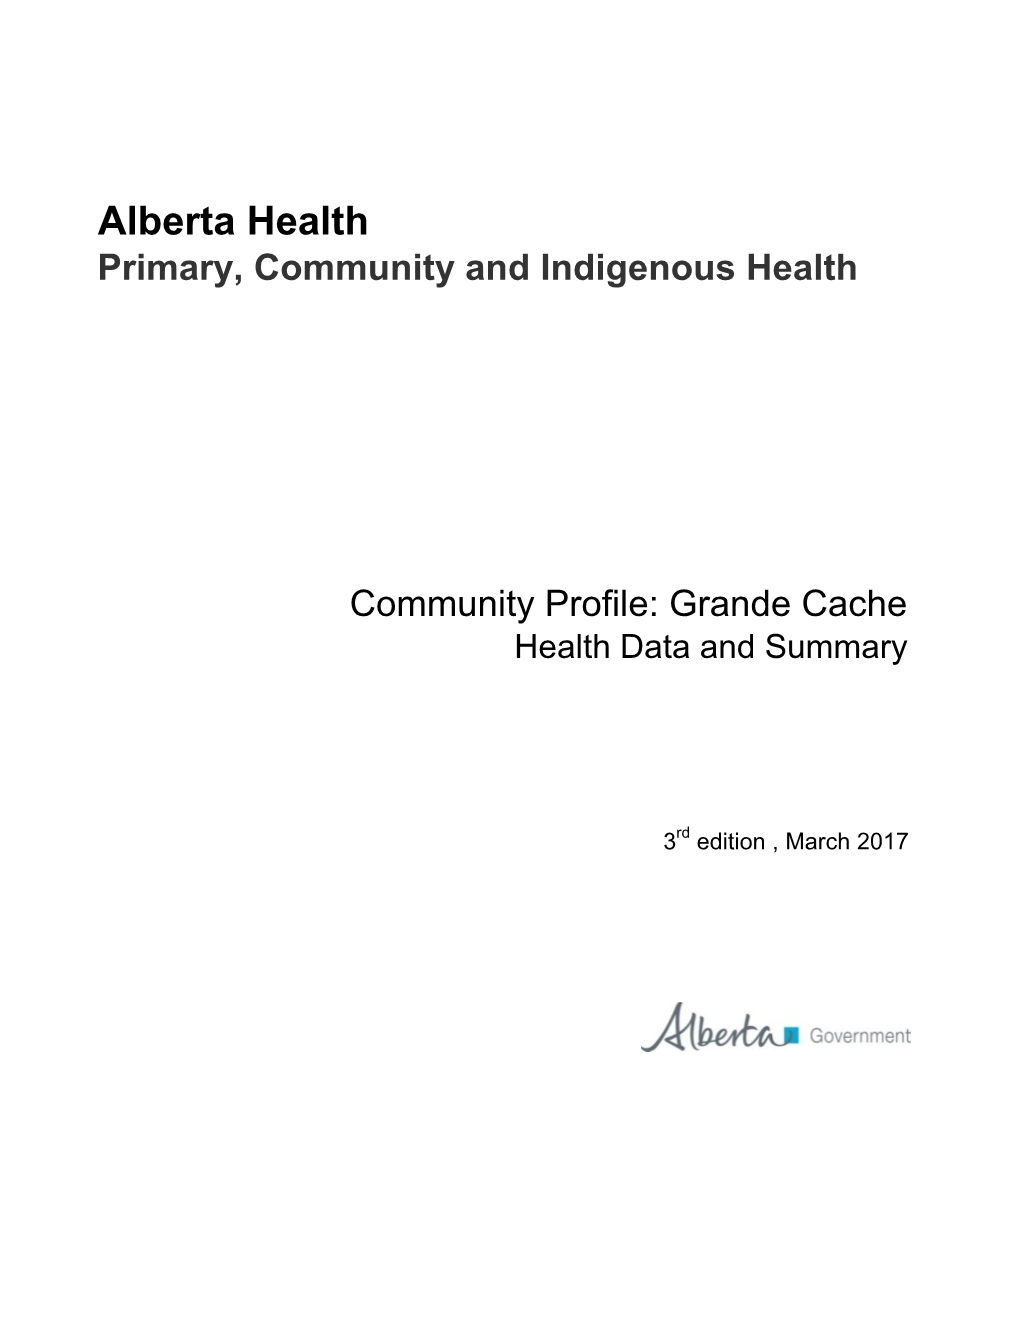 Grande Cache Health Data and Summary